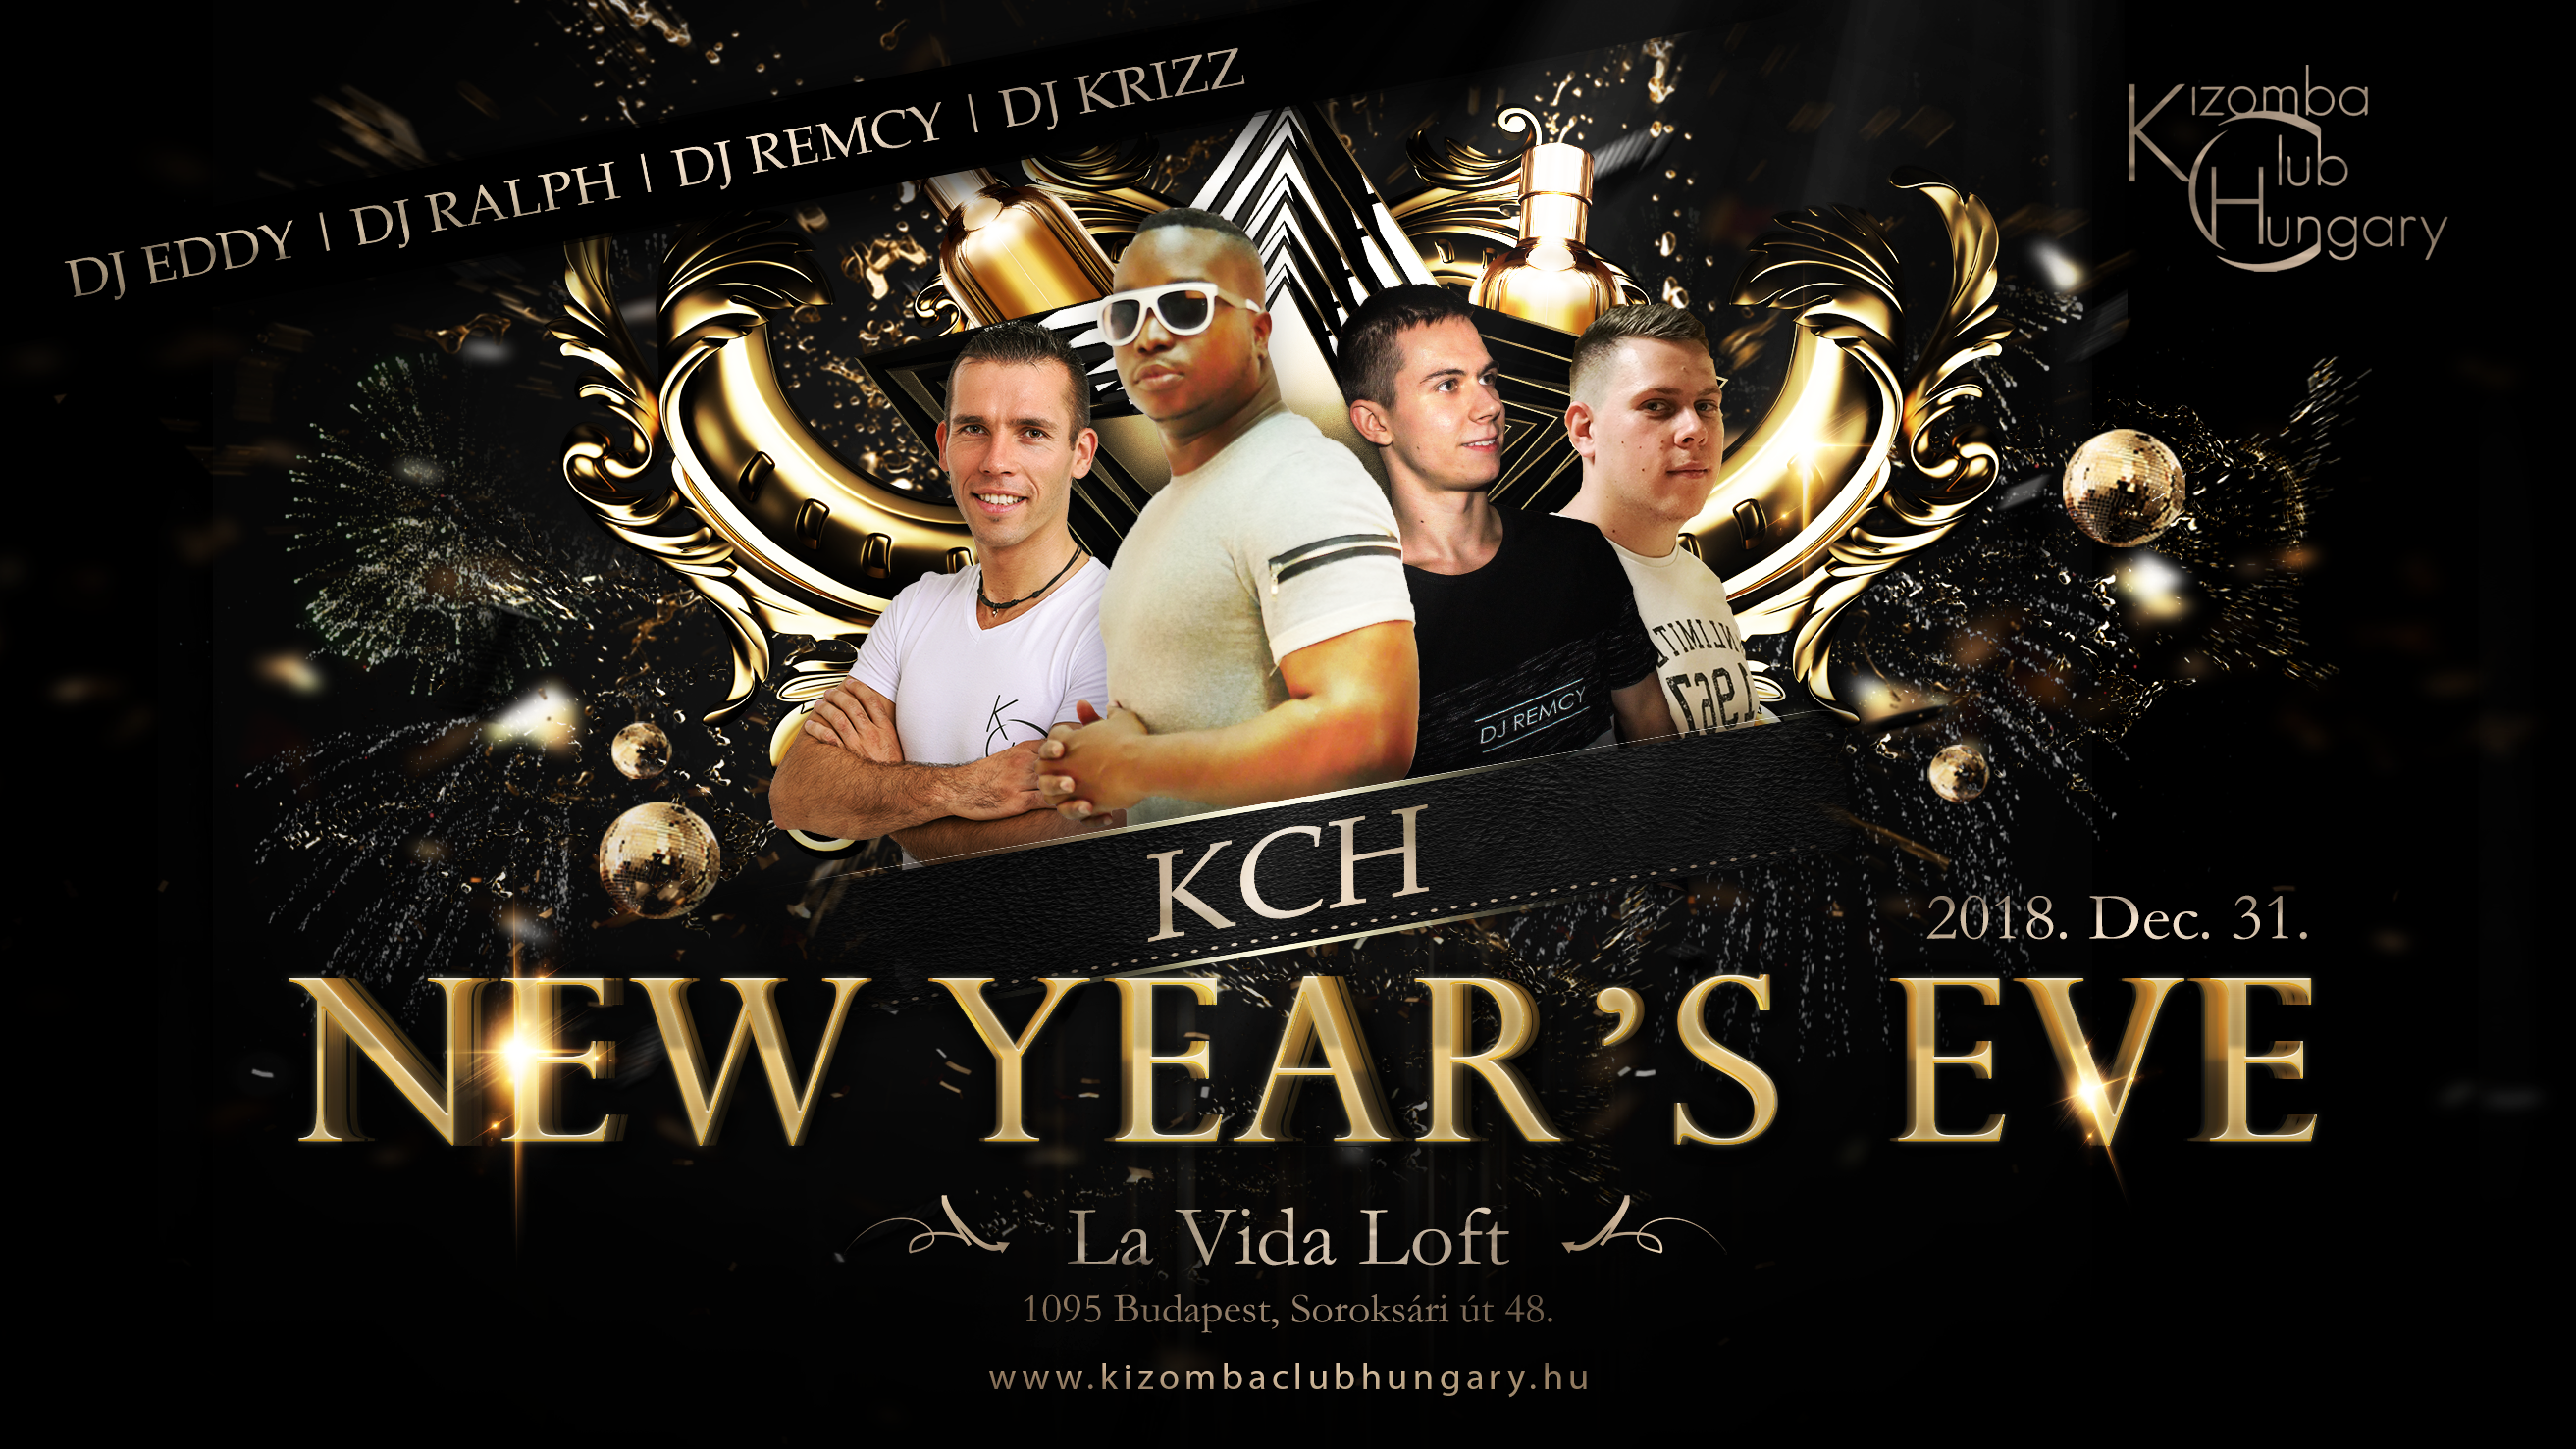 New Year's Eve - Kizomba Club Hungary